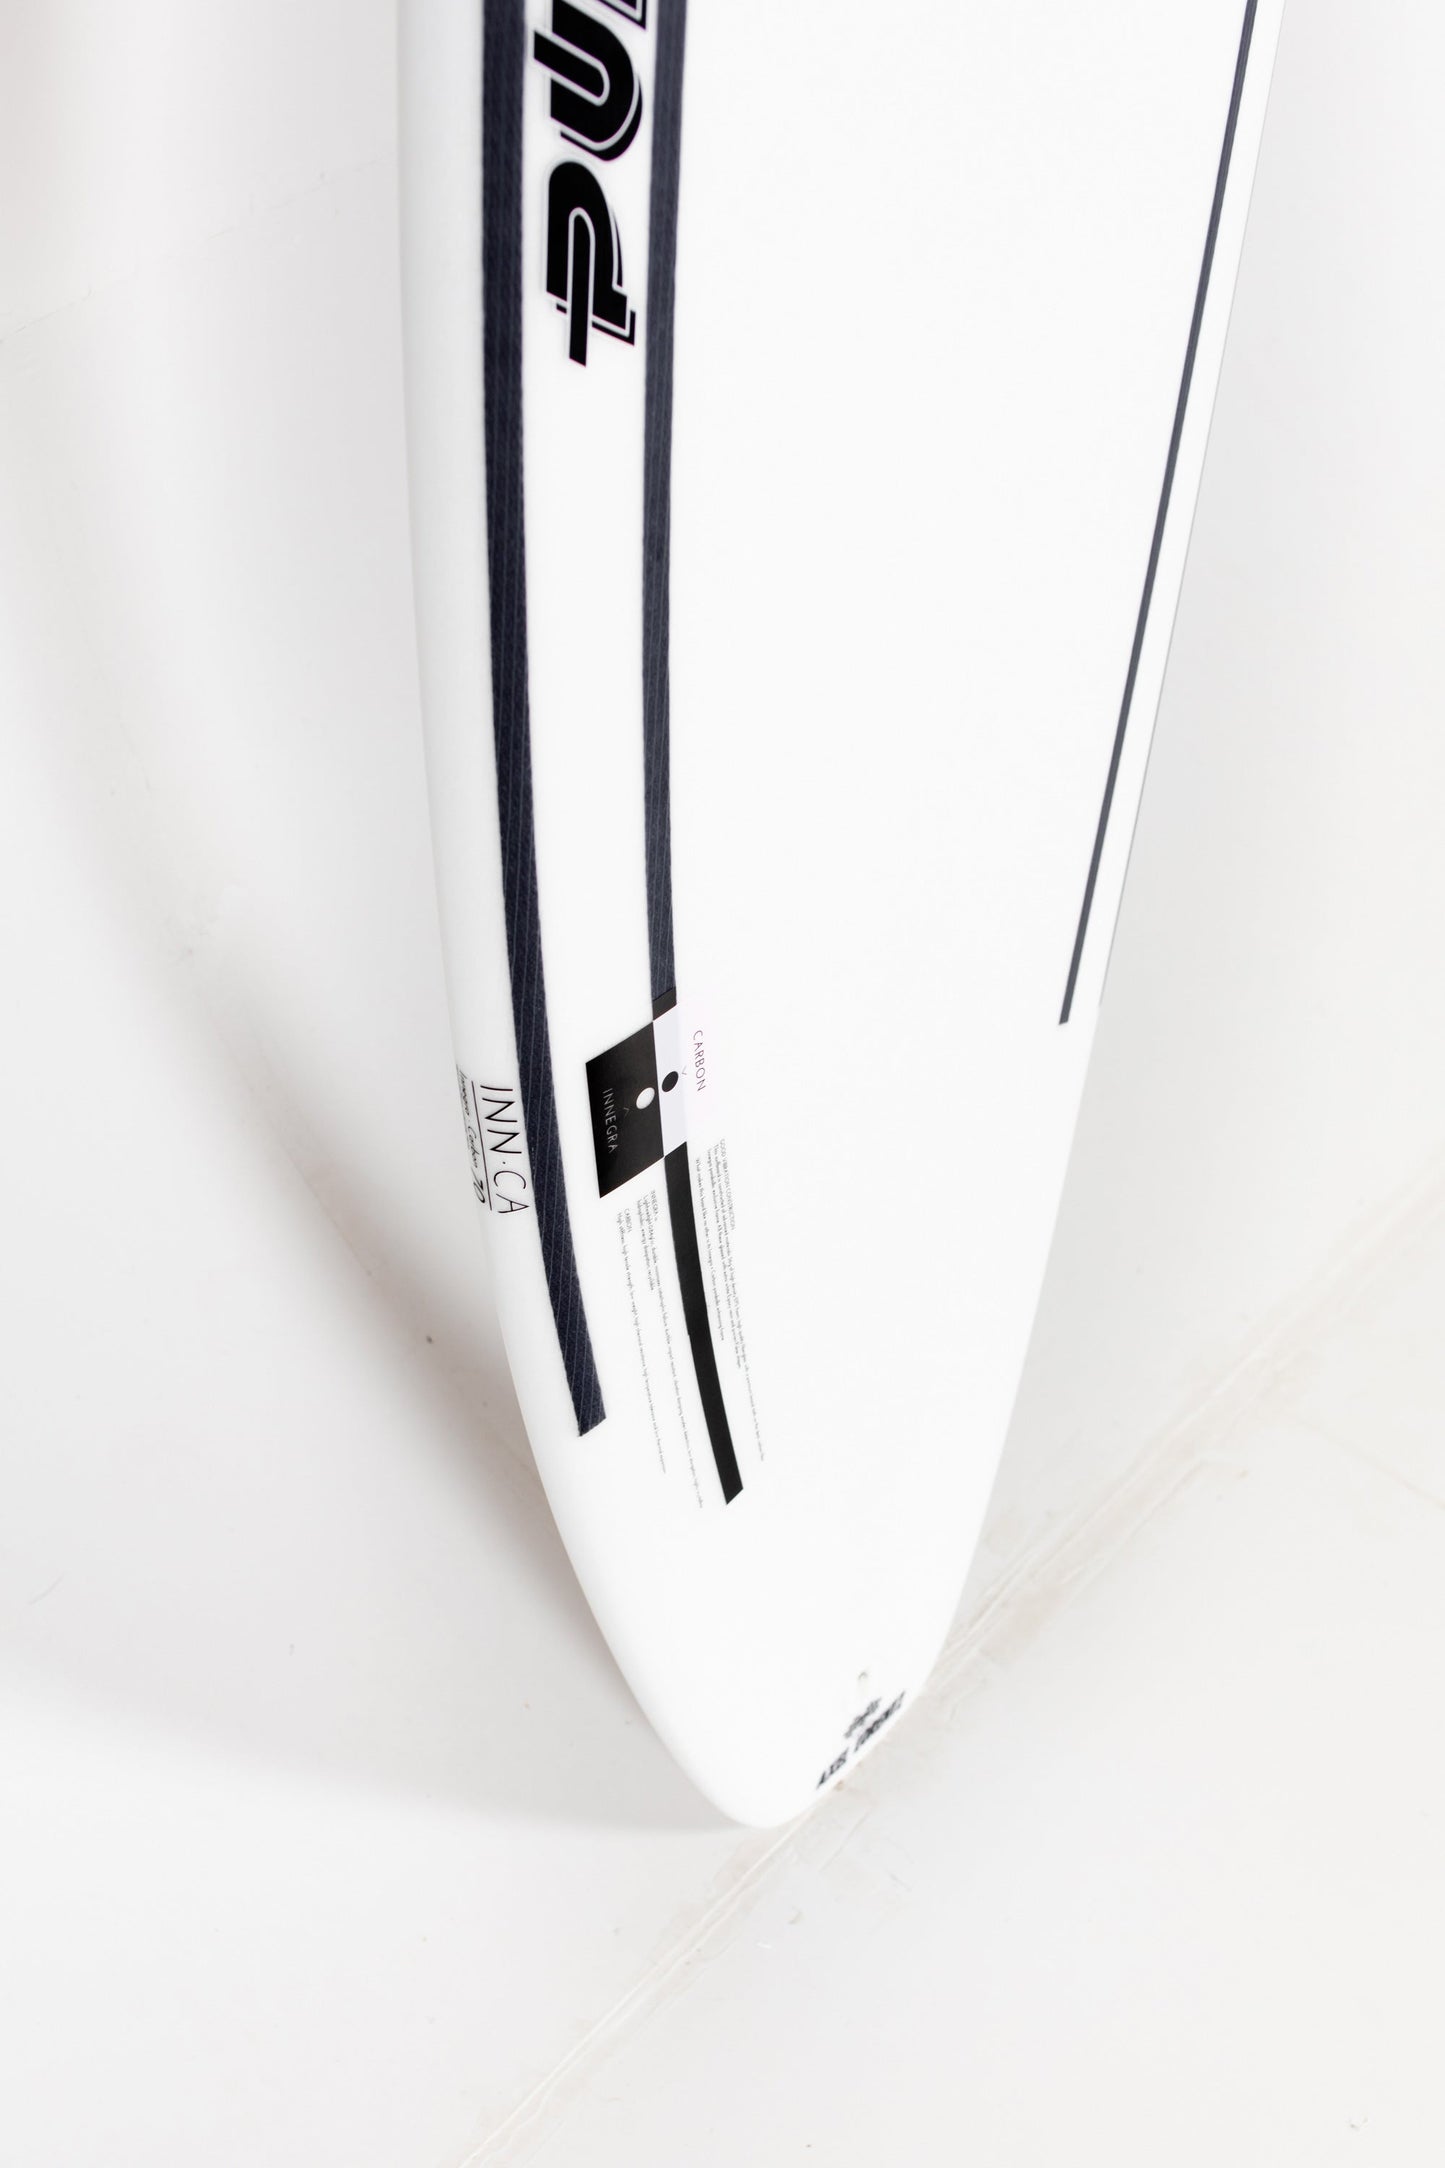 
                  
                    Pukas Surf Shop - Pukas Surfboard - INNCA Tec - DARK HP by Axel Lorentz - 6’2” 1/2 x 19,25 x 2,36 - 30,23L
                  
                